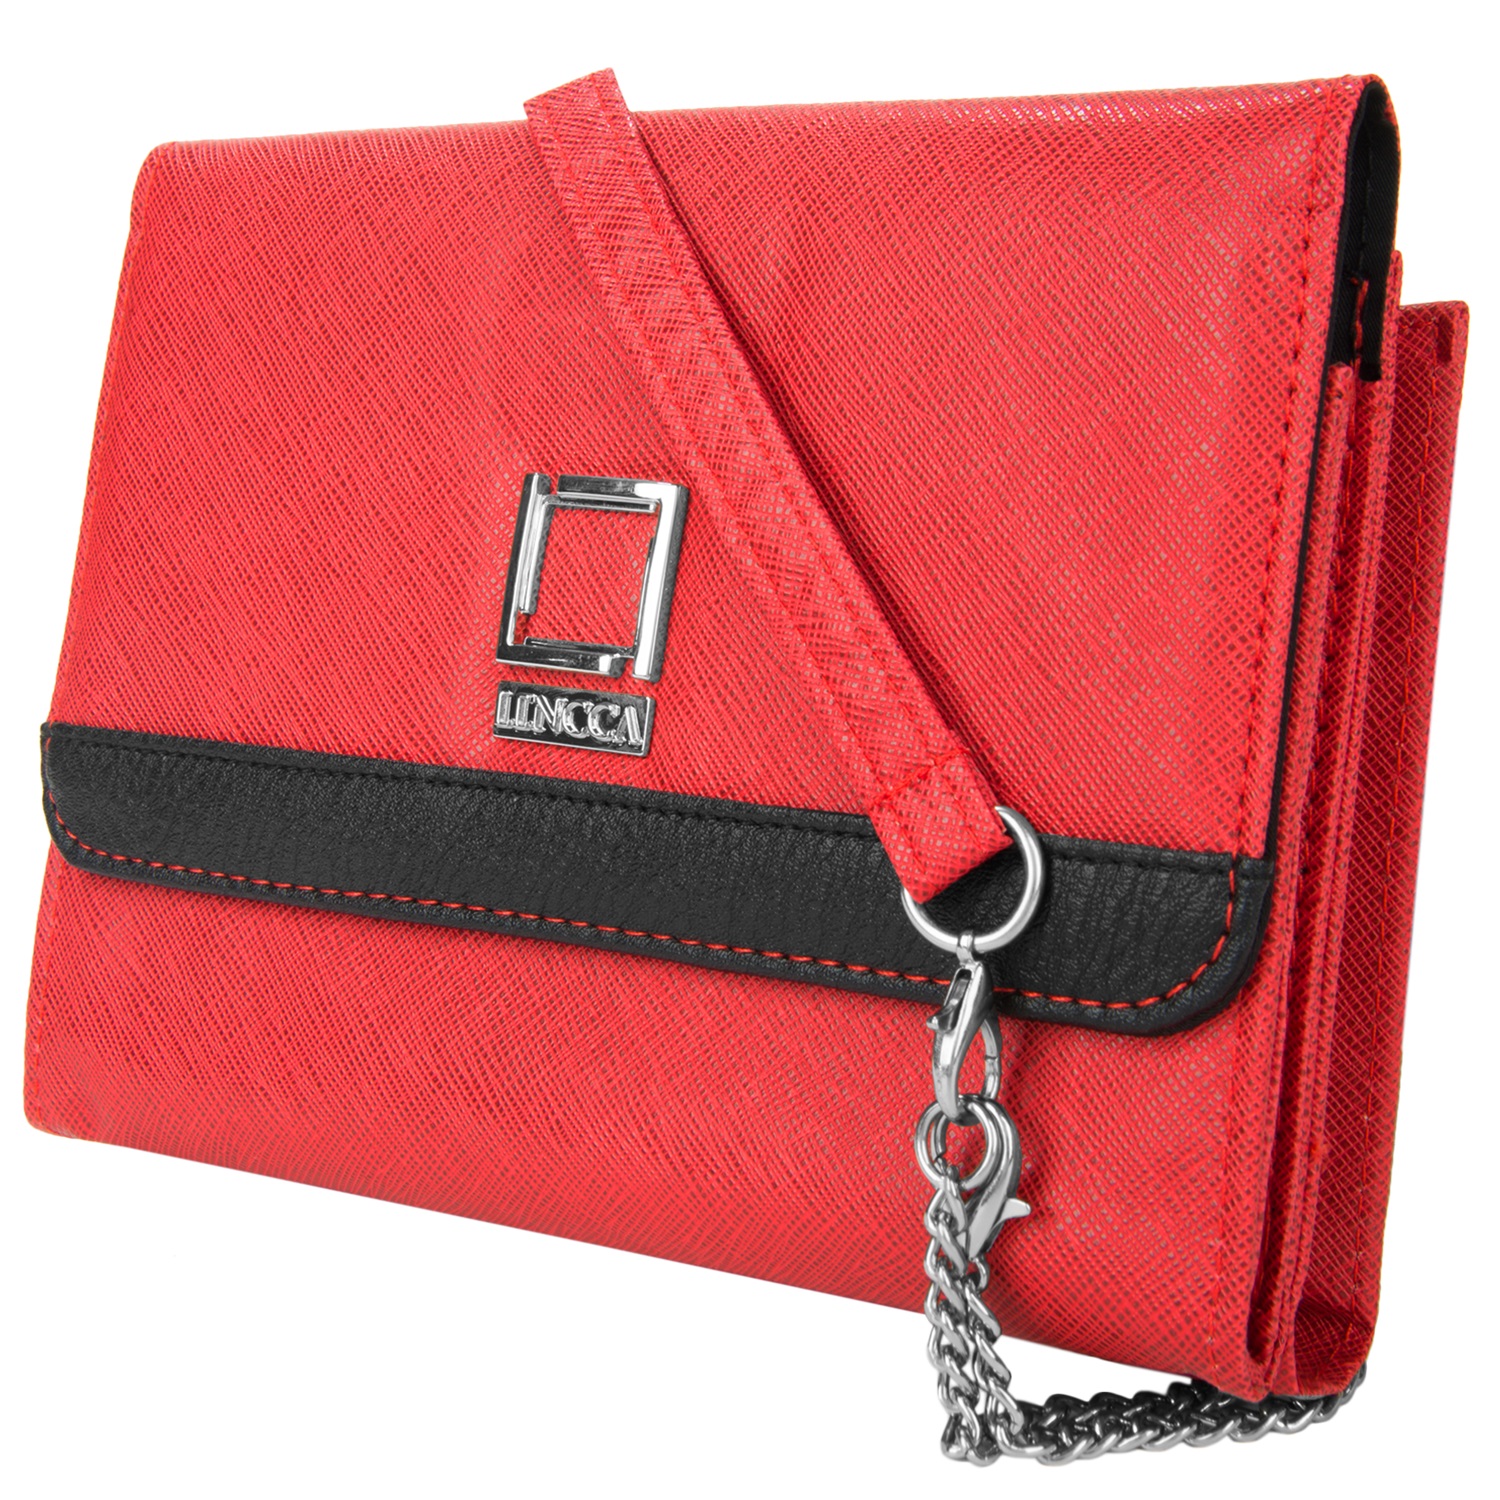 Lencca Nikina Woman’s Clutch Crossbody Fashion Handbag w/ Shoulder Strap fits MSI Tablets up to 7.9in x 5.25in